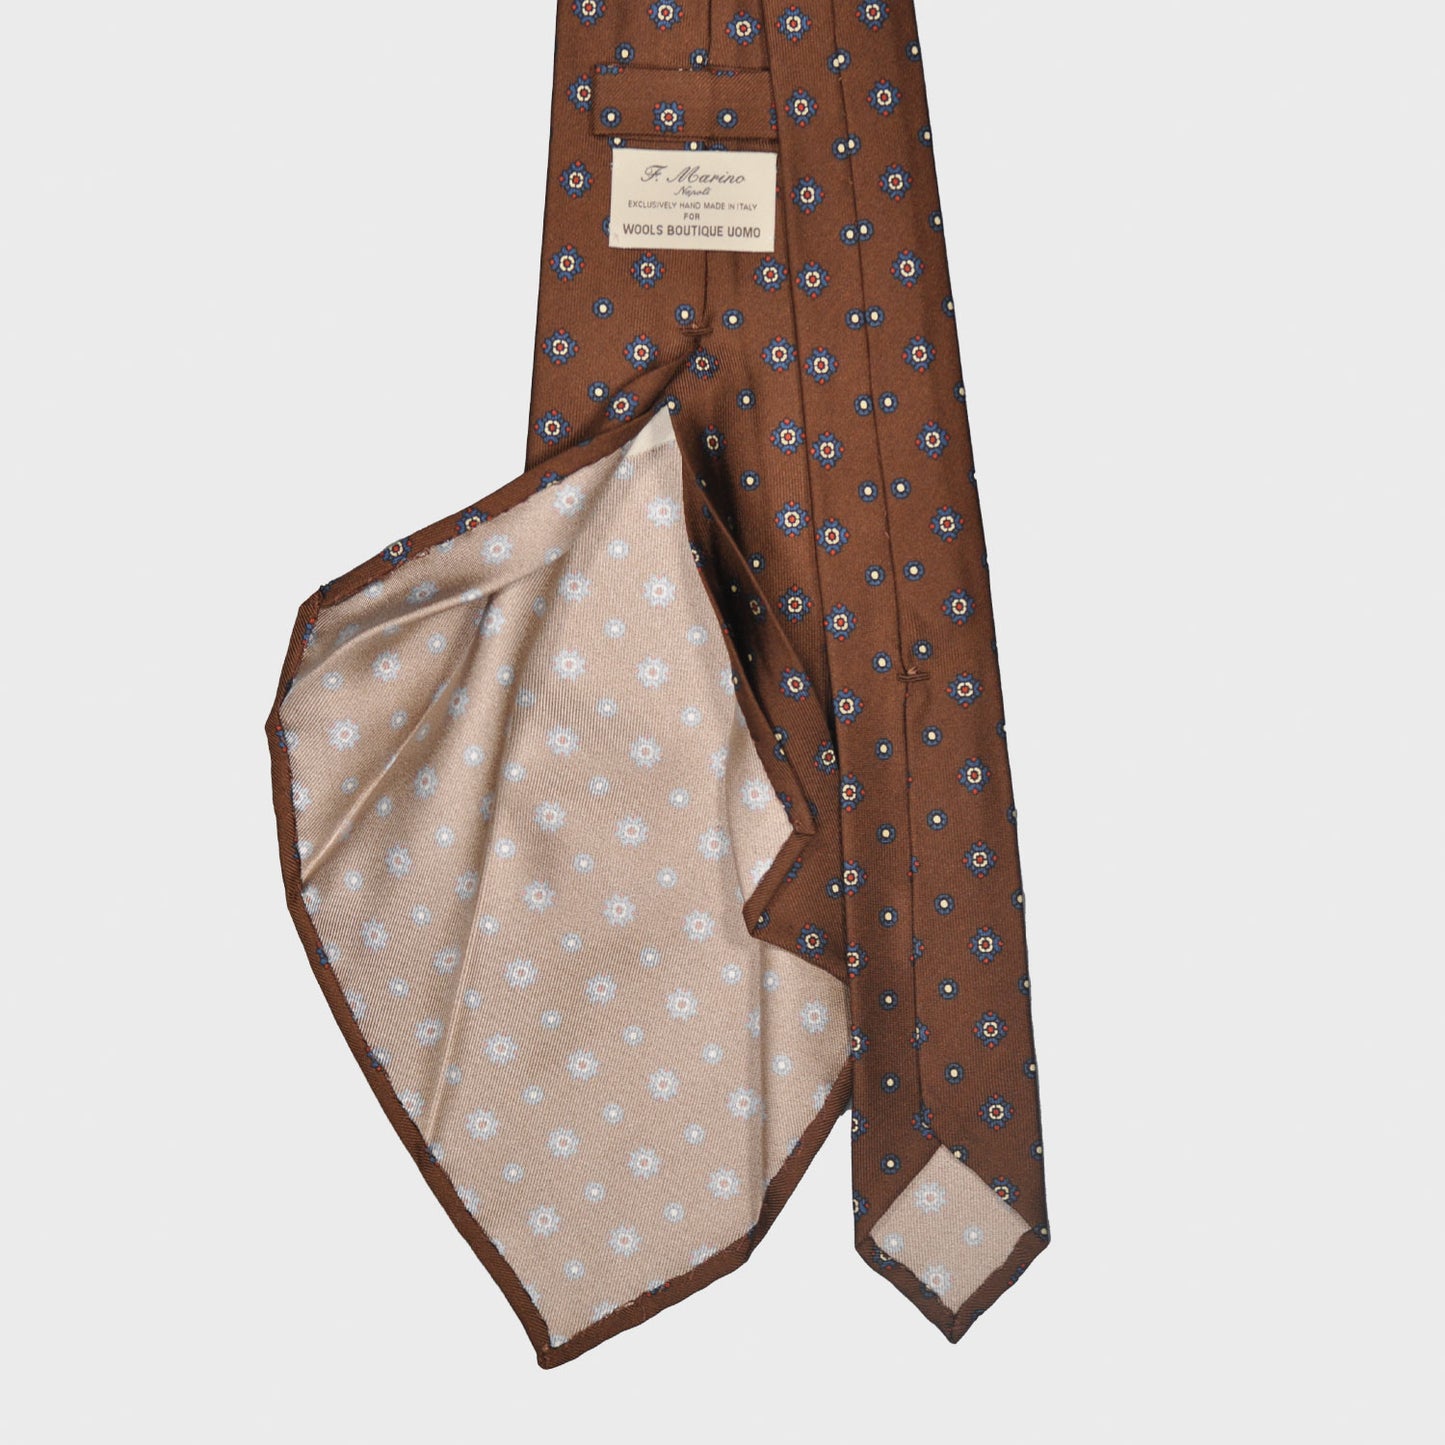 F.Marino Silk Tie 7 Folds Diamonds Coffee Brown-Wools Boutique Uomo